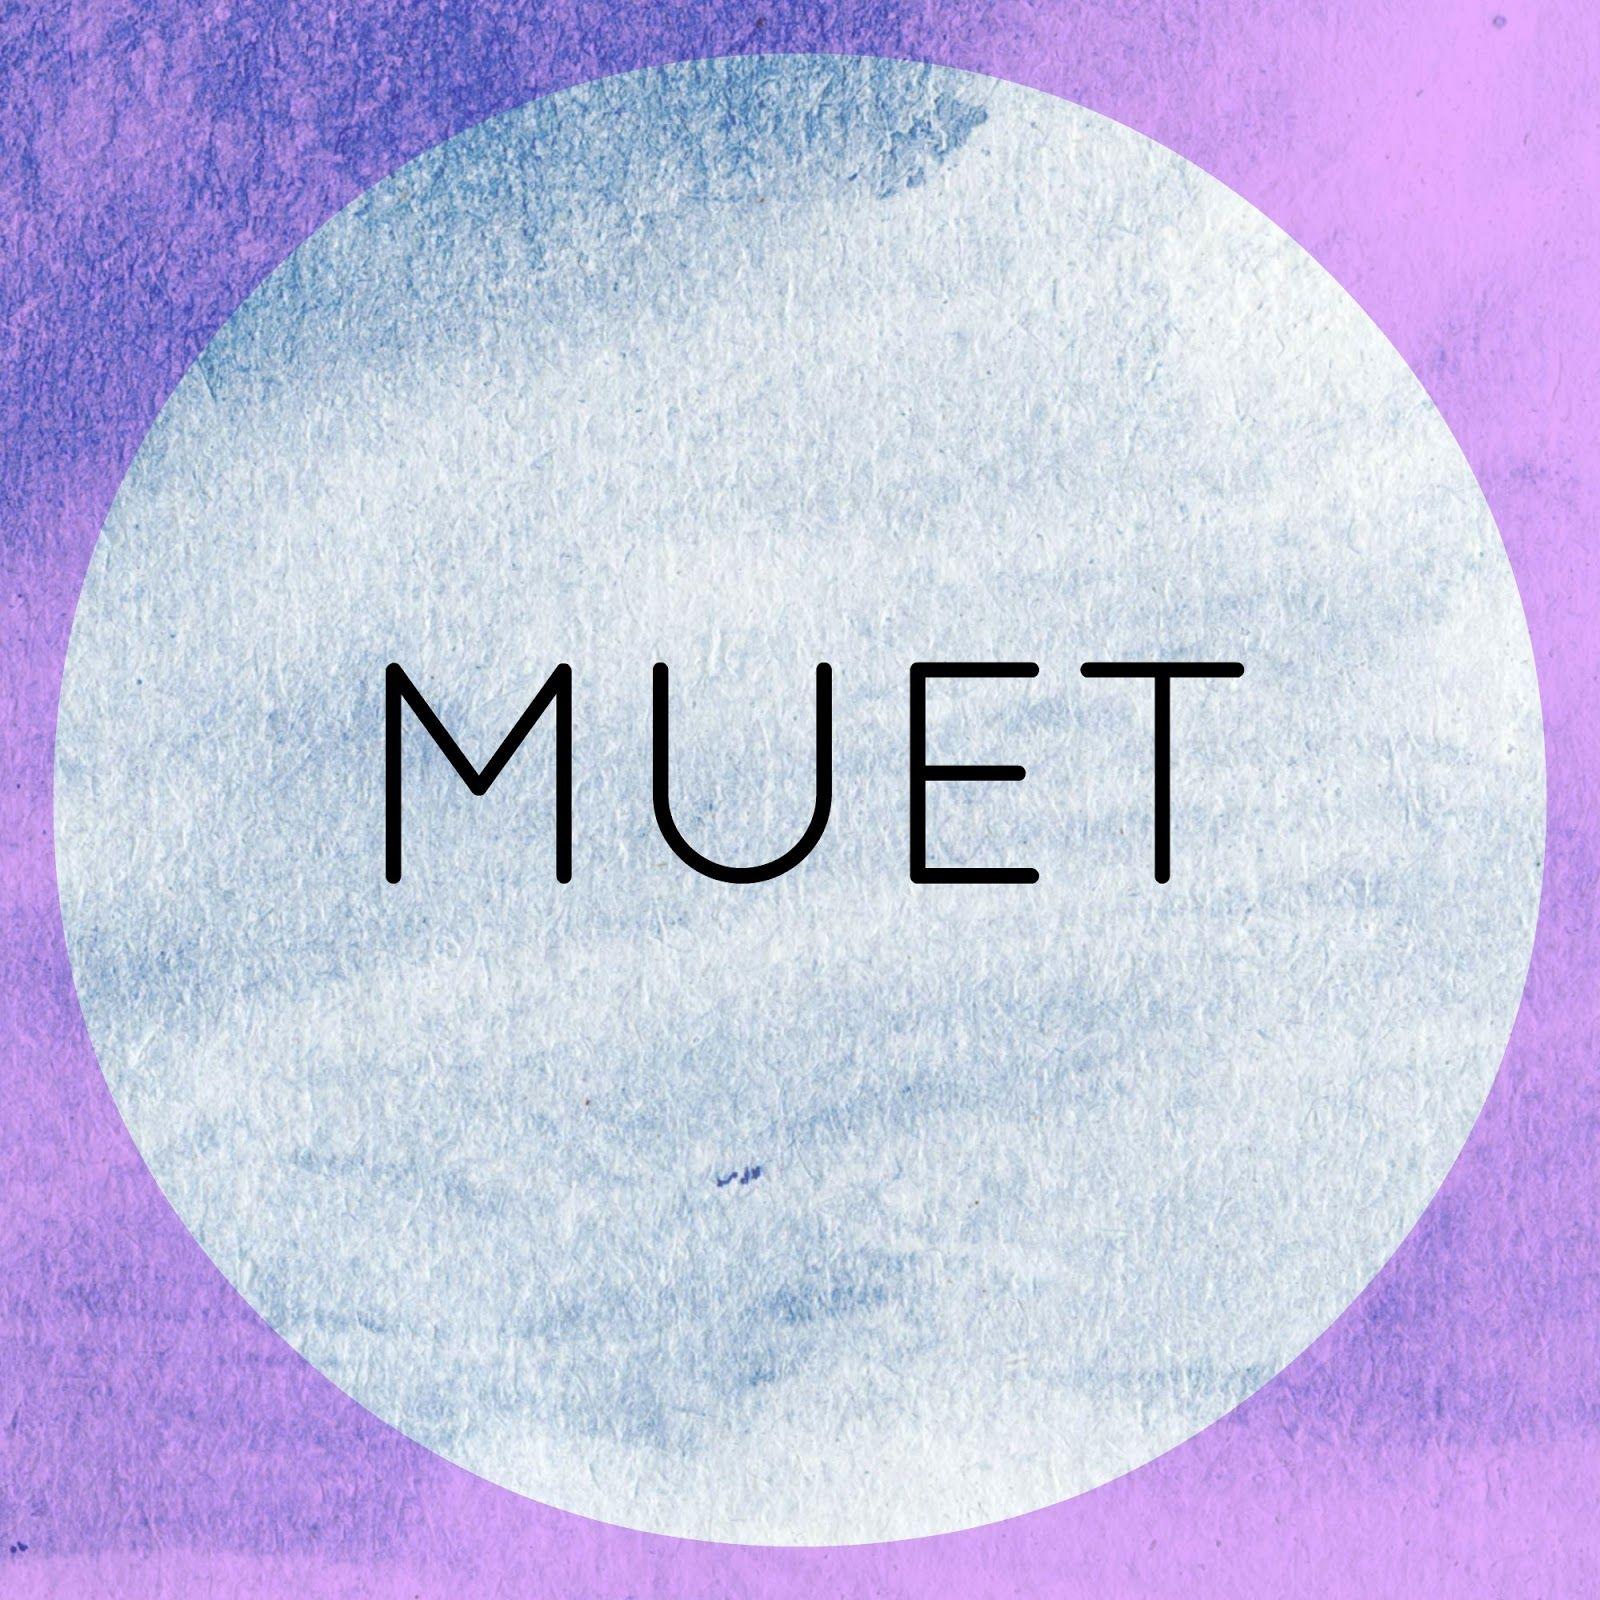 MUET Logo - IR: MUET: My Experience!